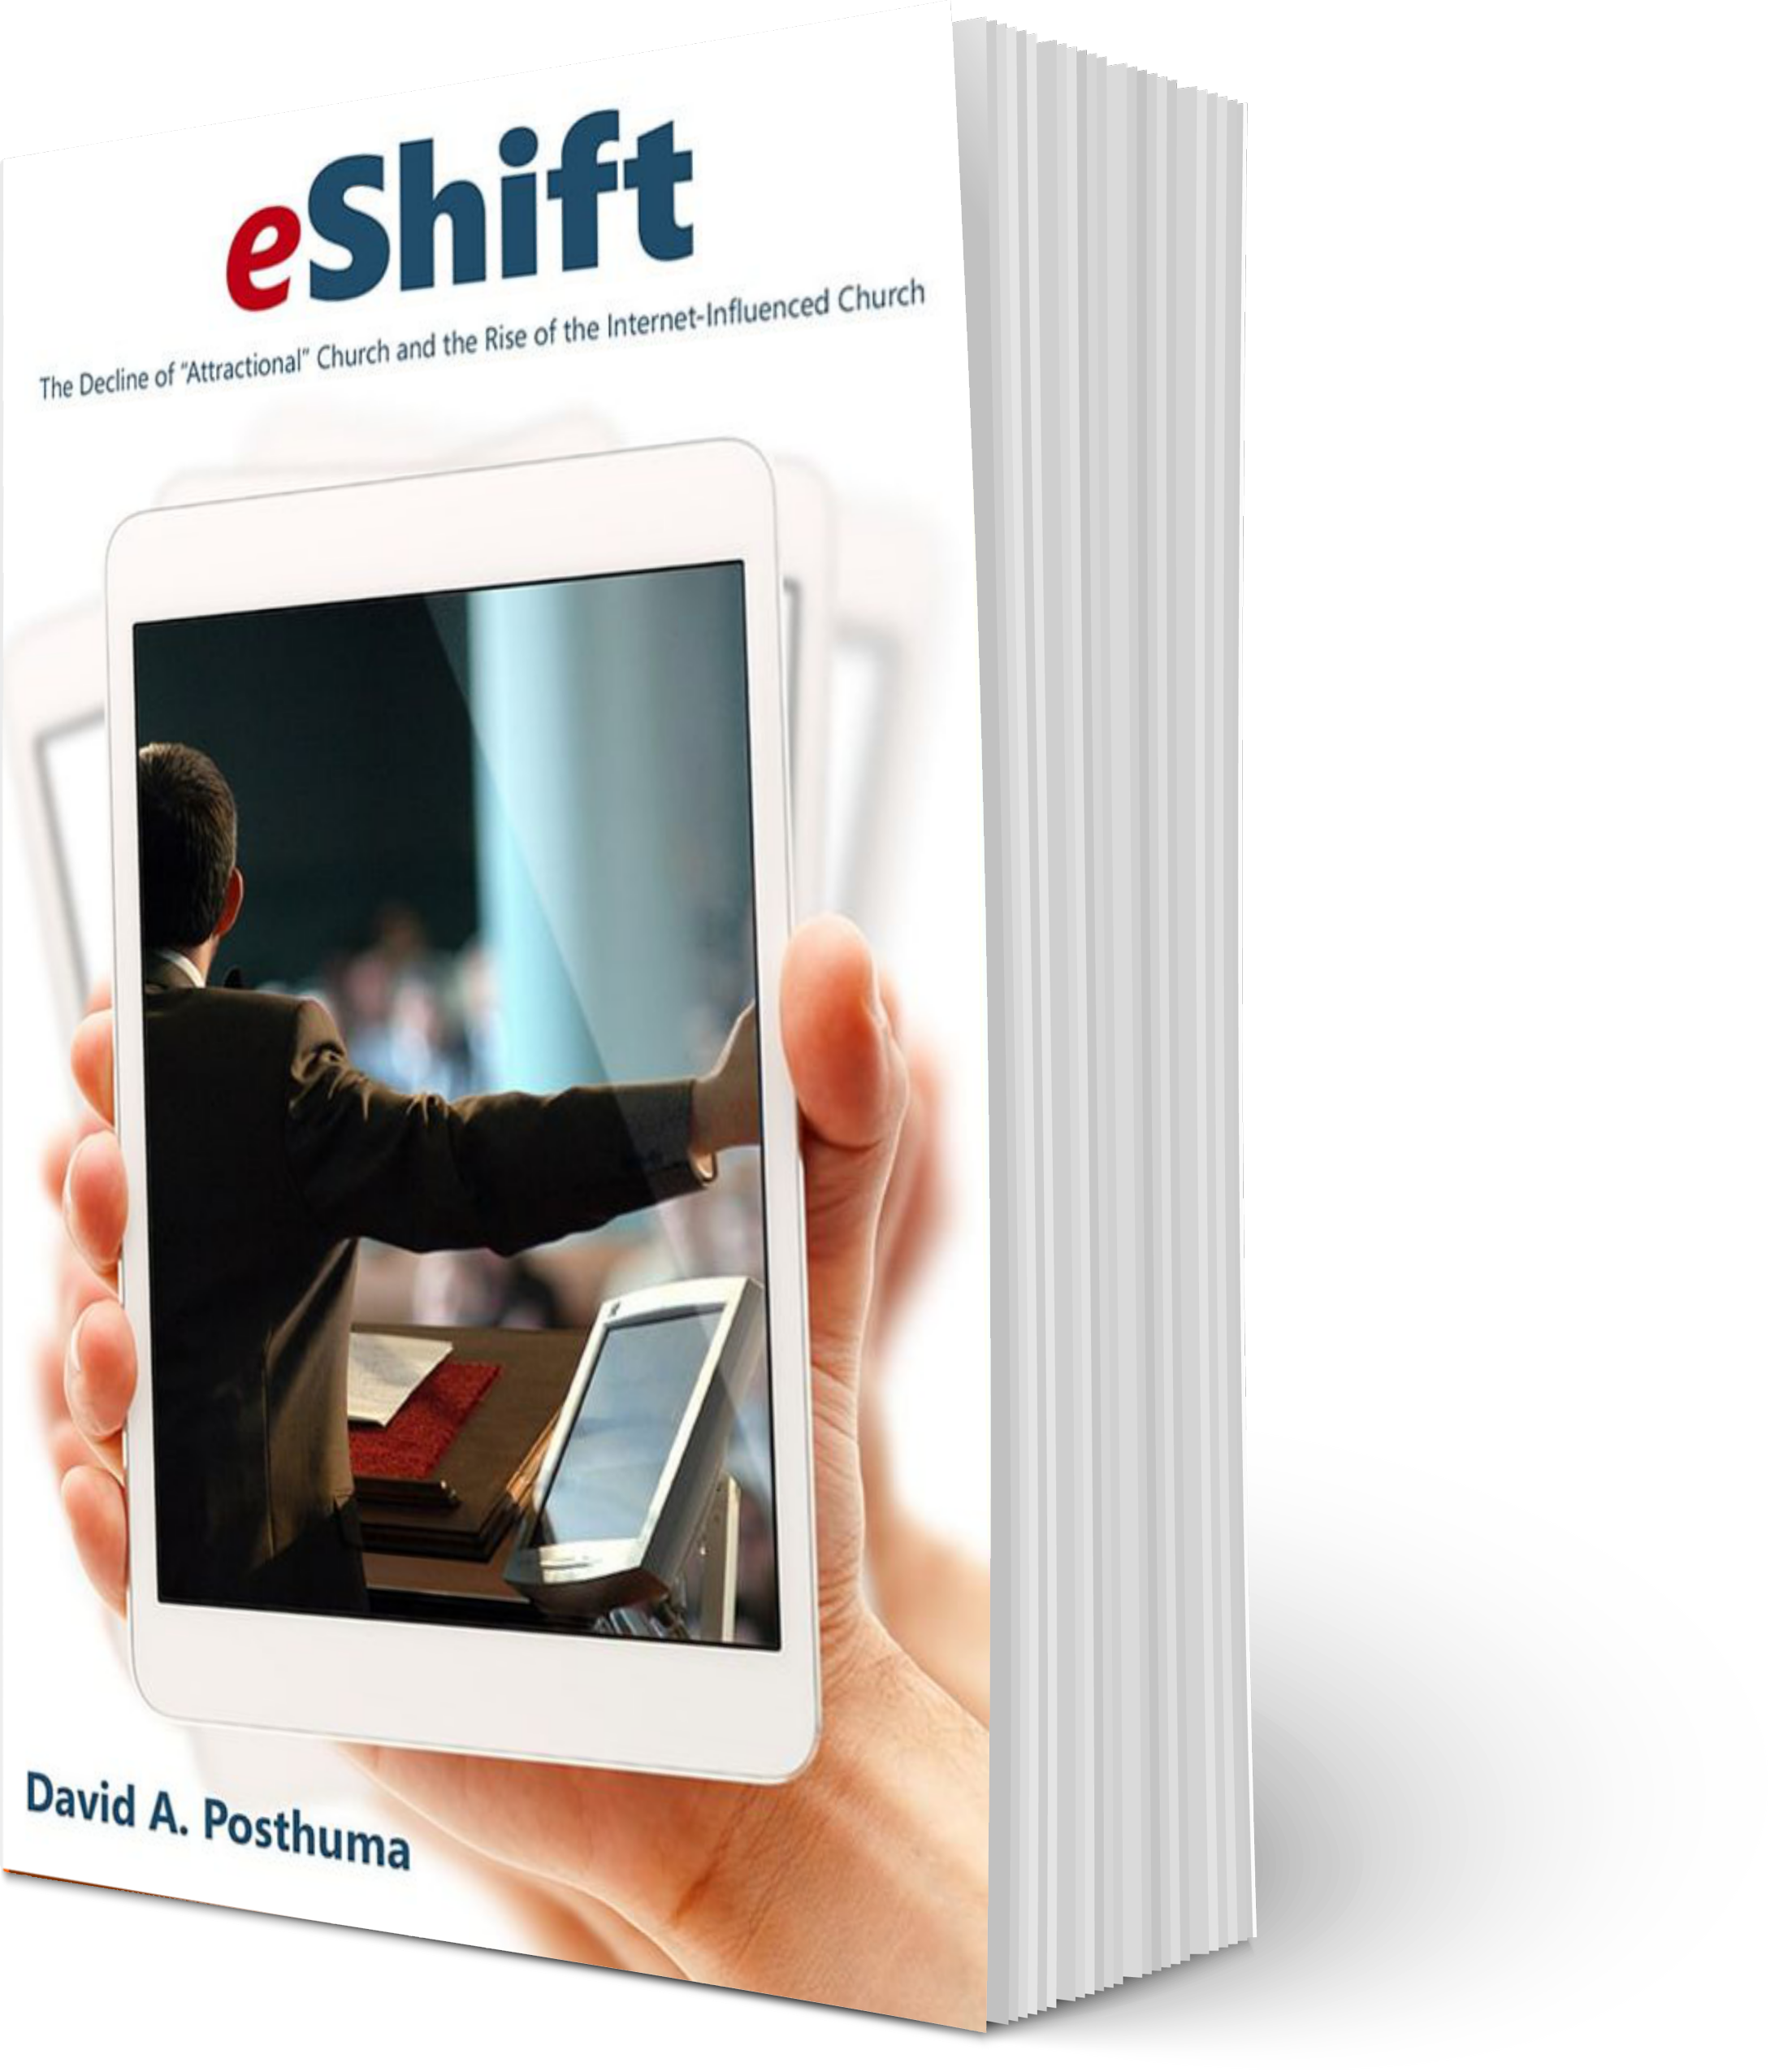 eShift book by David A Posthuma.